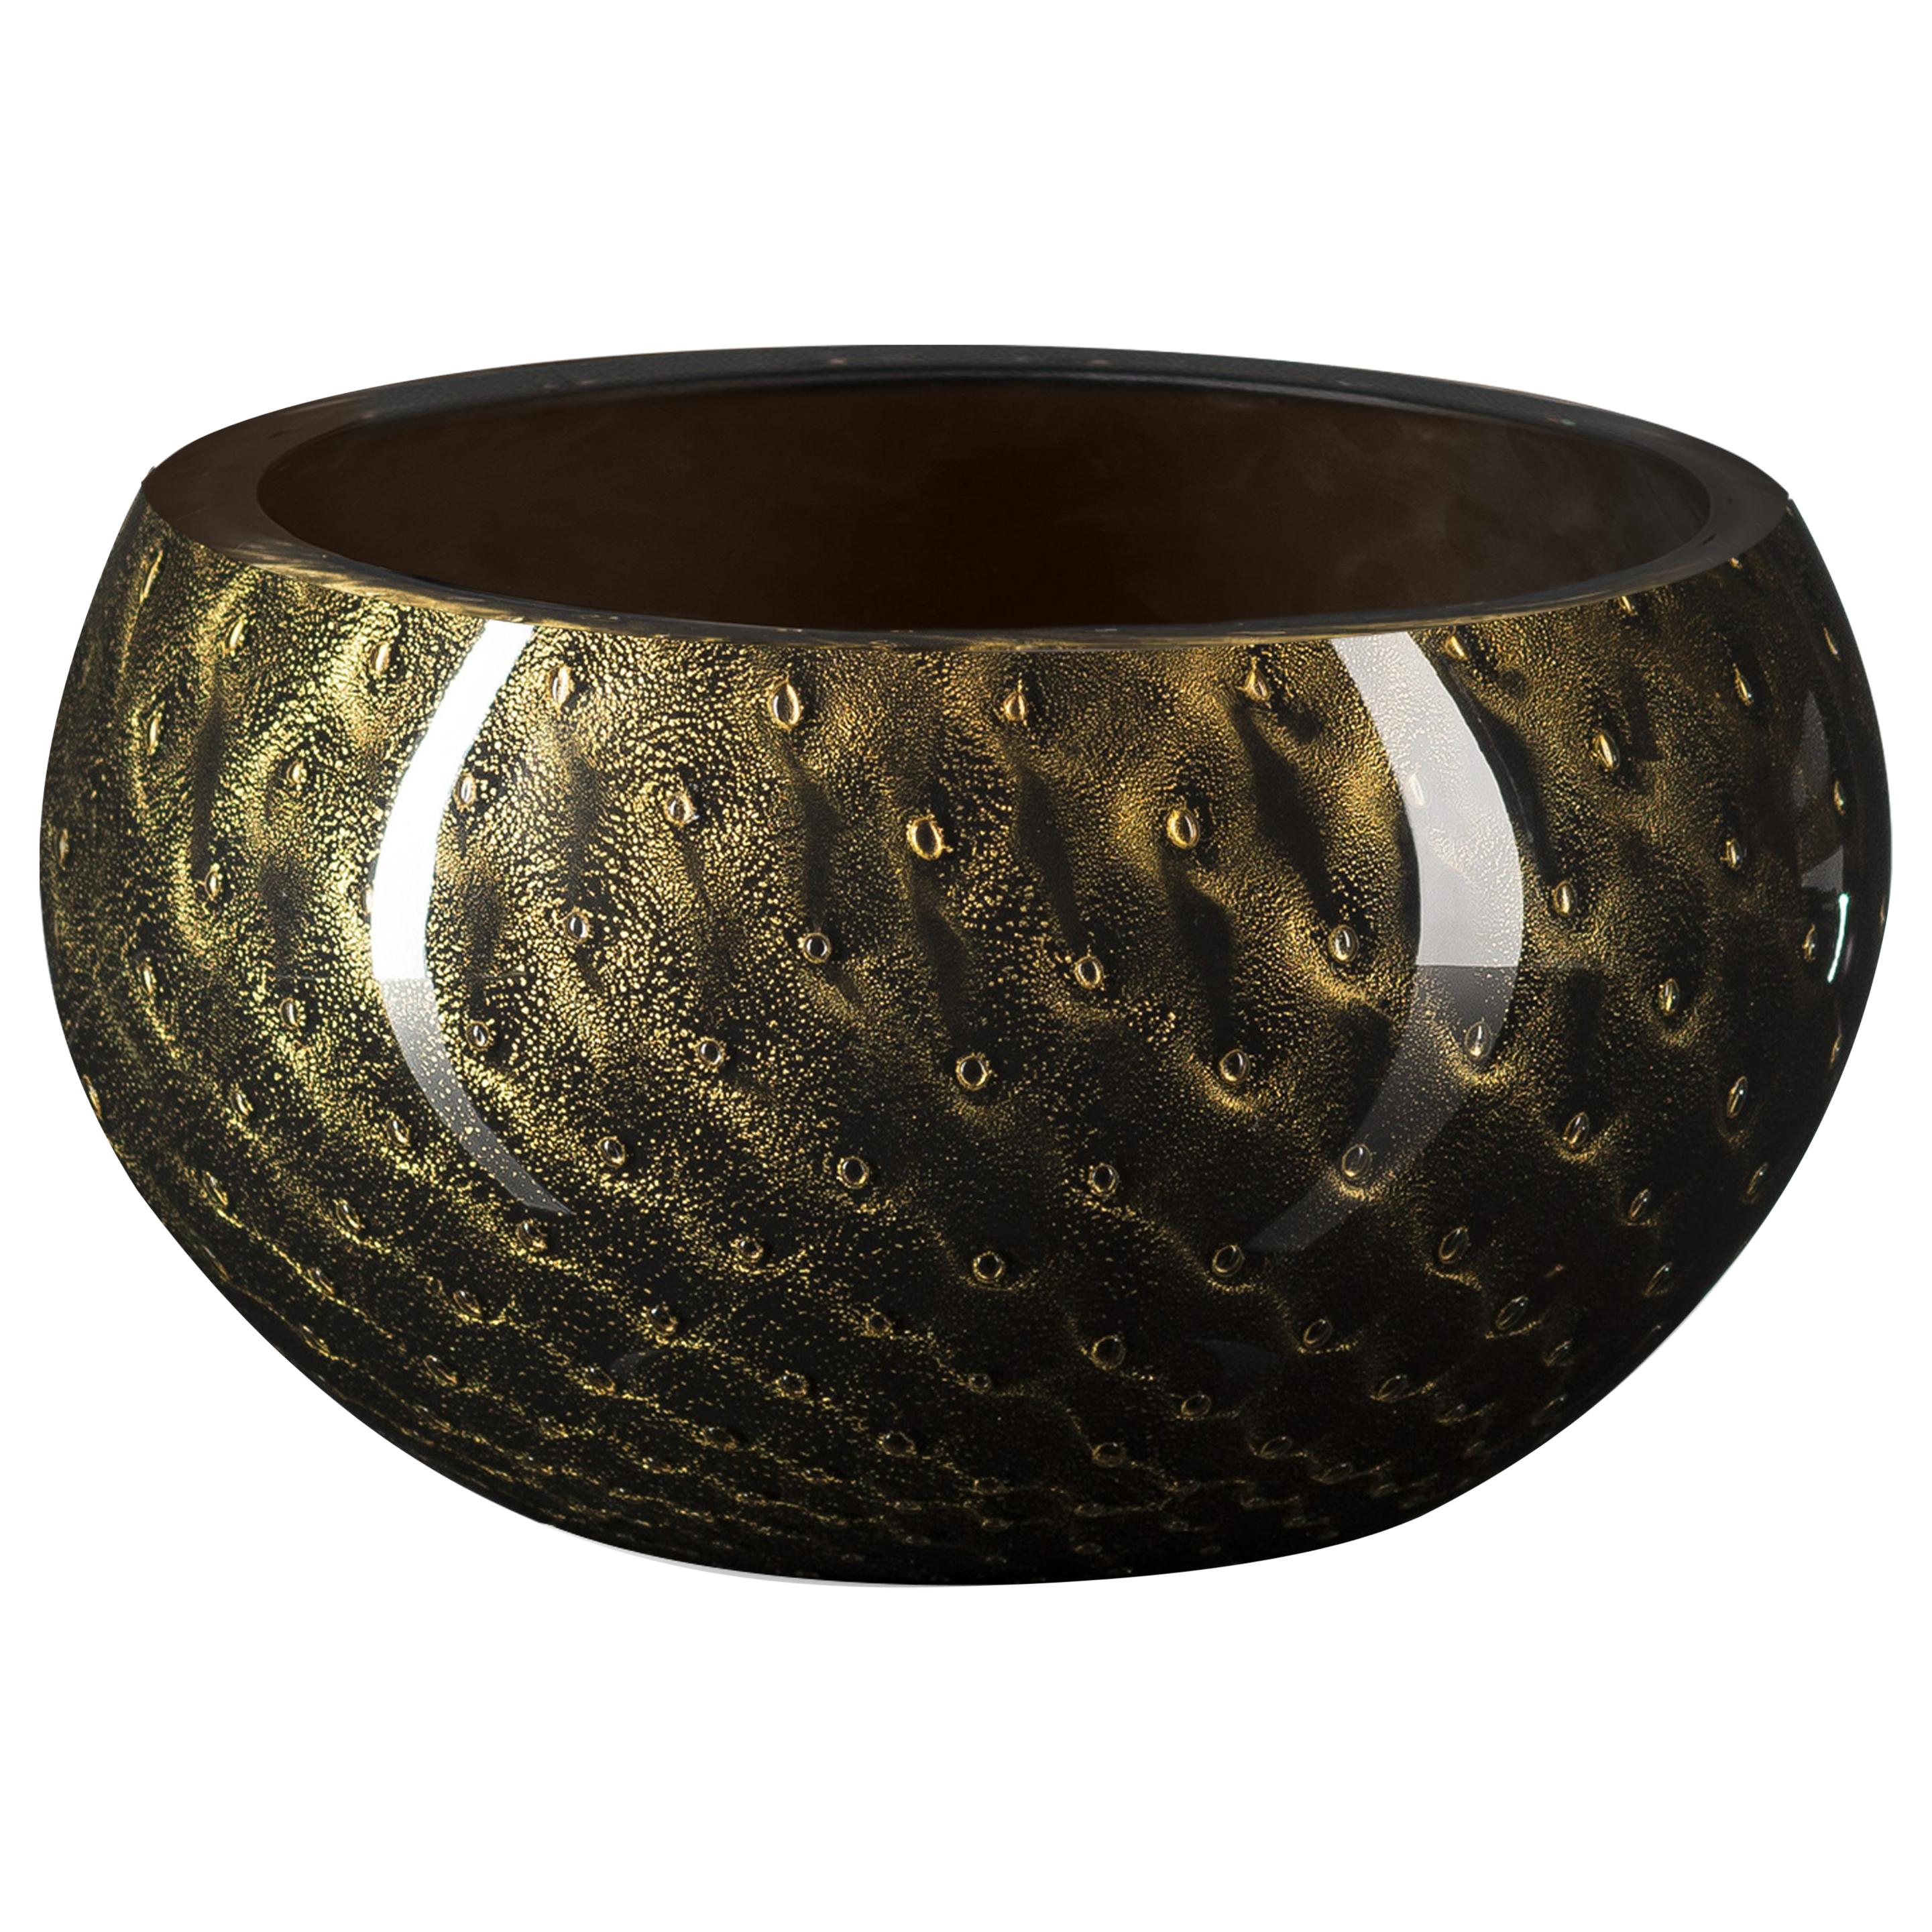 Bowl Mocenigo, Muranese Glass, Gold 24-Karat and Black, Italy